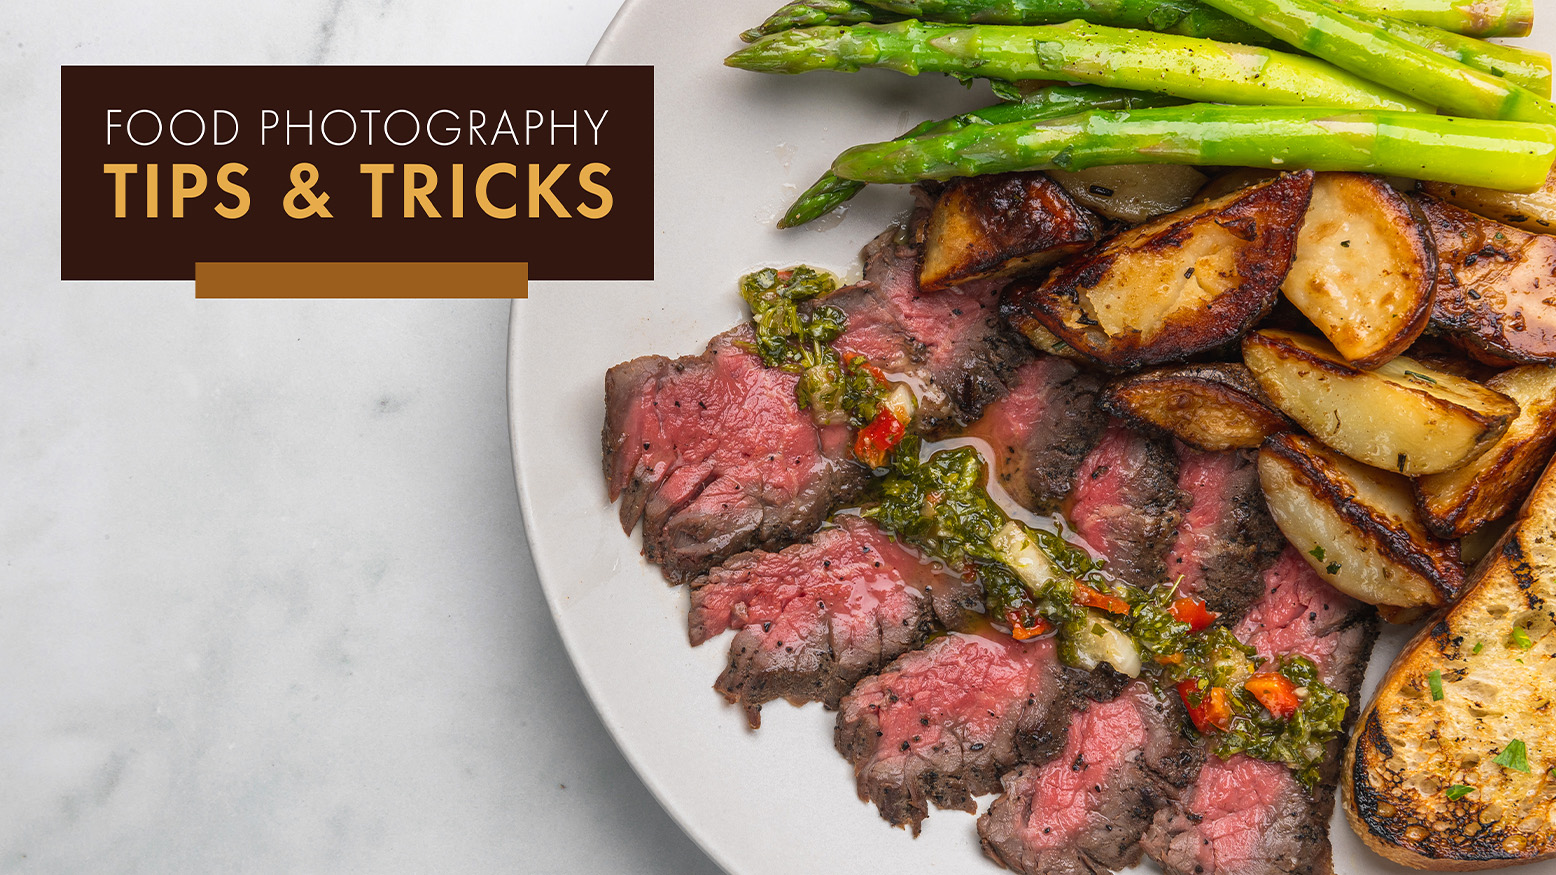 Food Photography Tips & Tricks